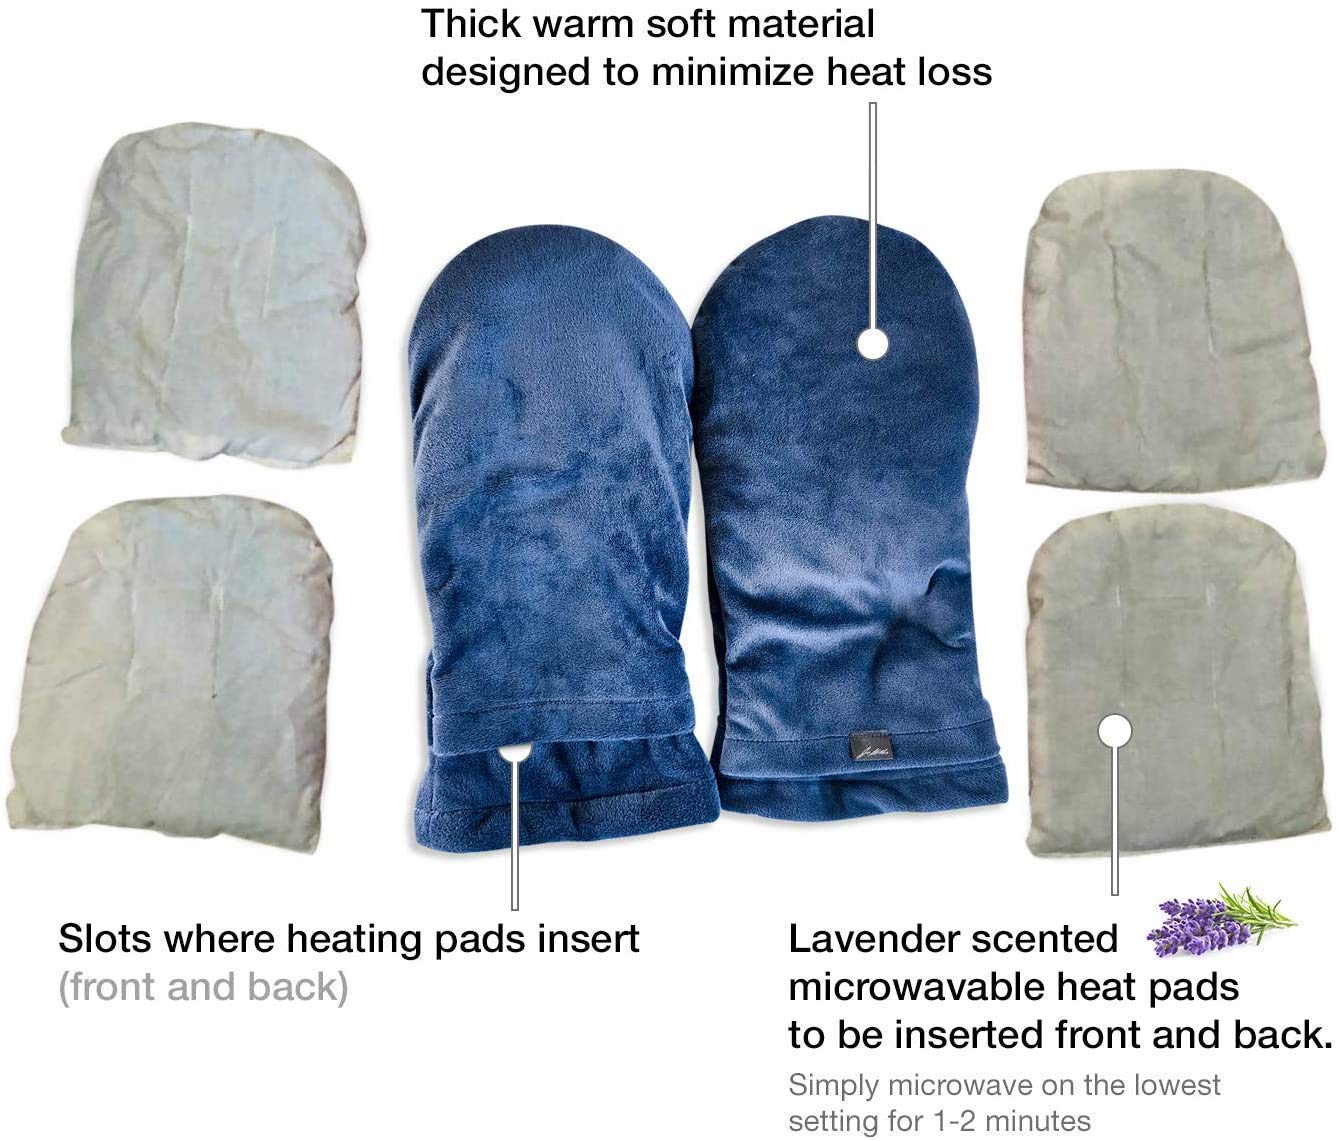 Bundle: Heat Therapy Arthritis Gloves (Lavender Scented, Universally Sized, 1 Pair, Blue0 + Carpal Tunnel Wrist Brace w/Splint (Left)